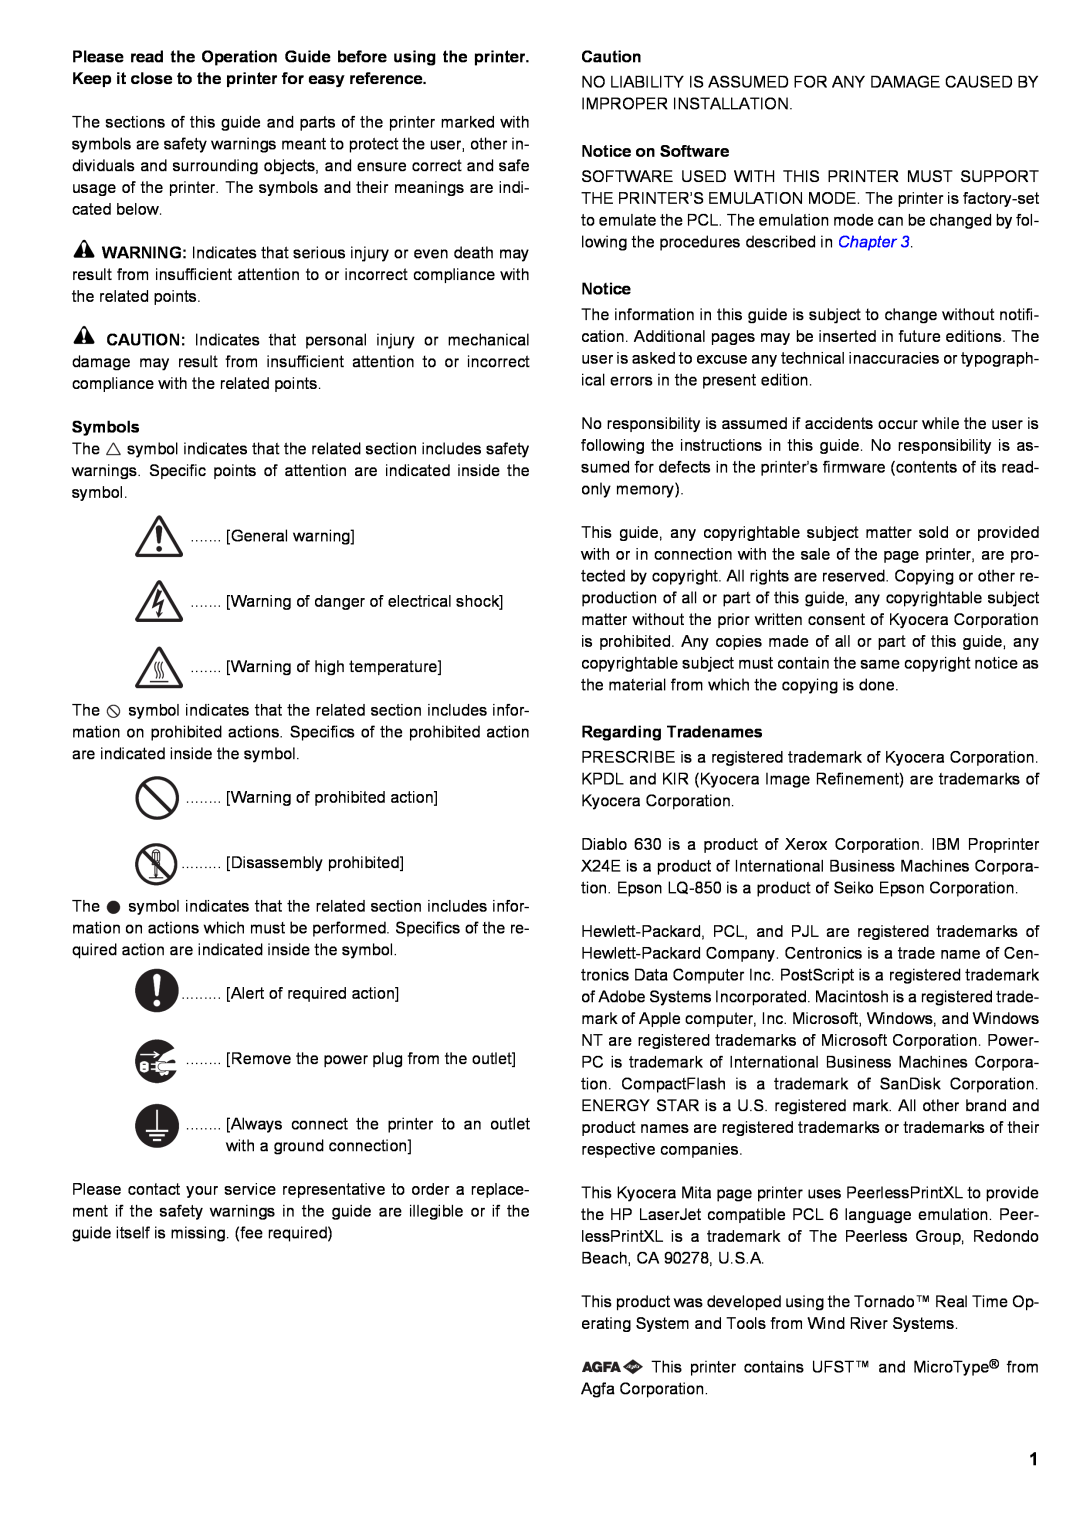 Kyocera S-9100DN manual Symbols, Notice on Software, Regarding Tradenames 